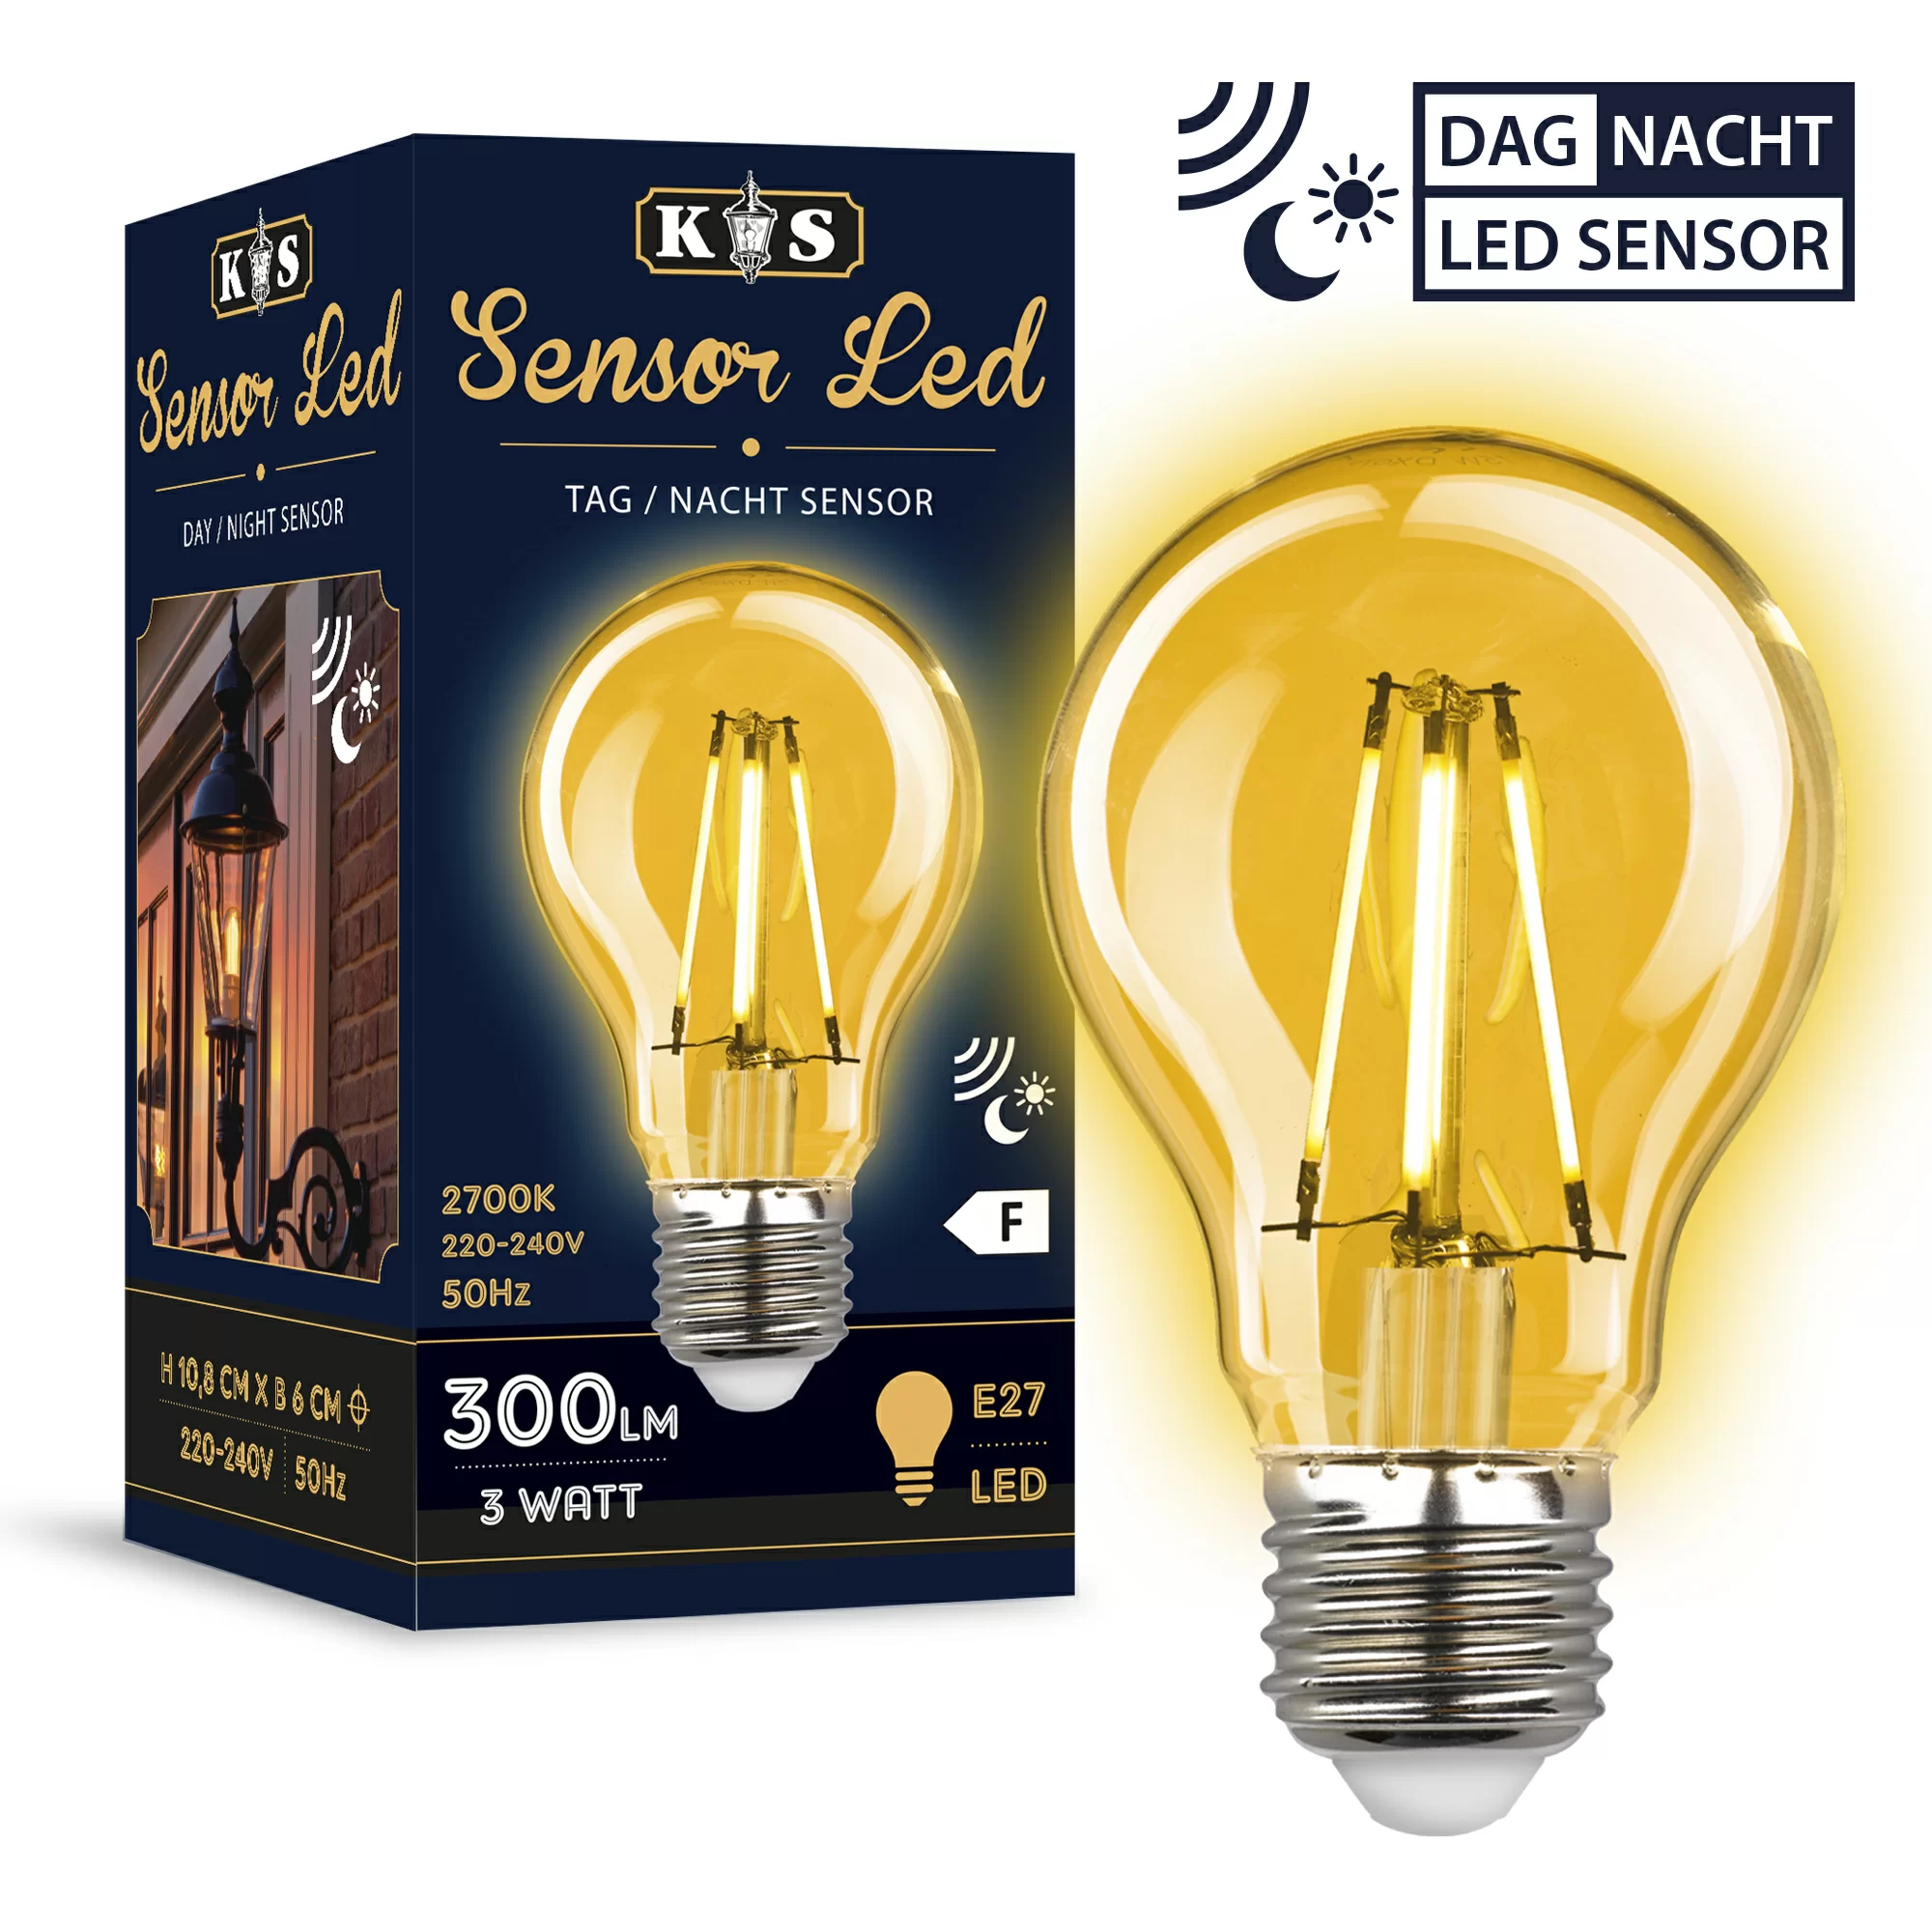 Il leef ermee Diagnostiseren E27 Led lamp met ingebouwde dag & nacht / Schemer Sensor | Nostalux.nl